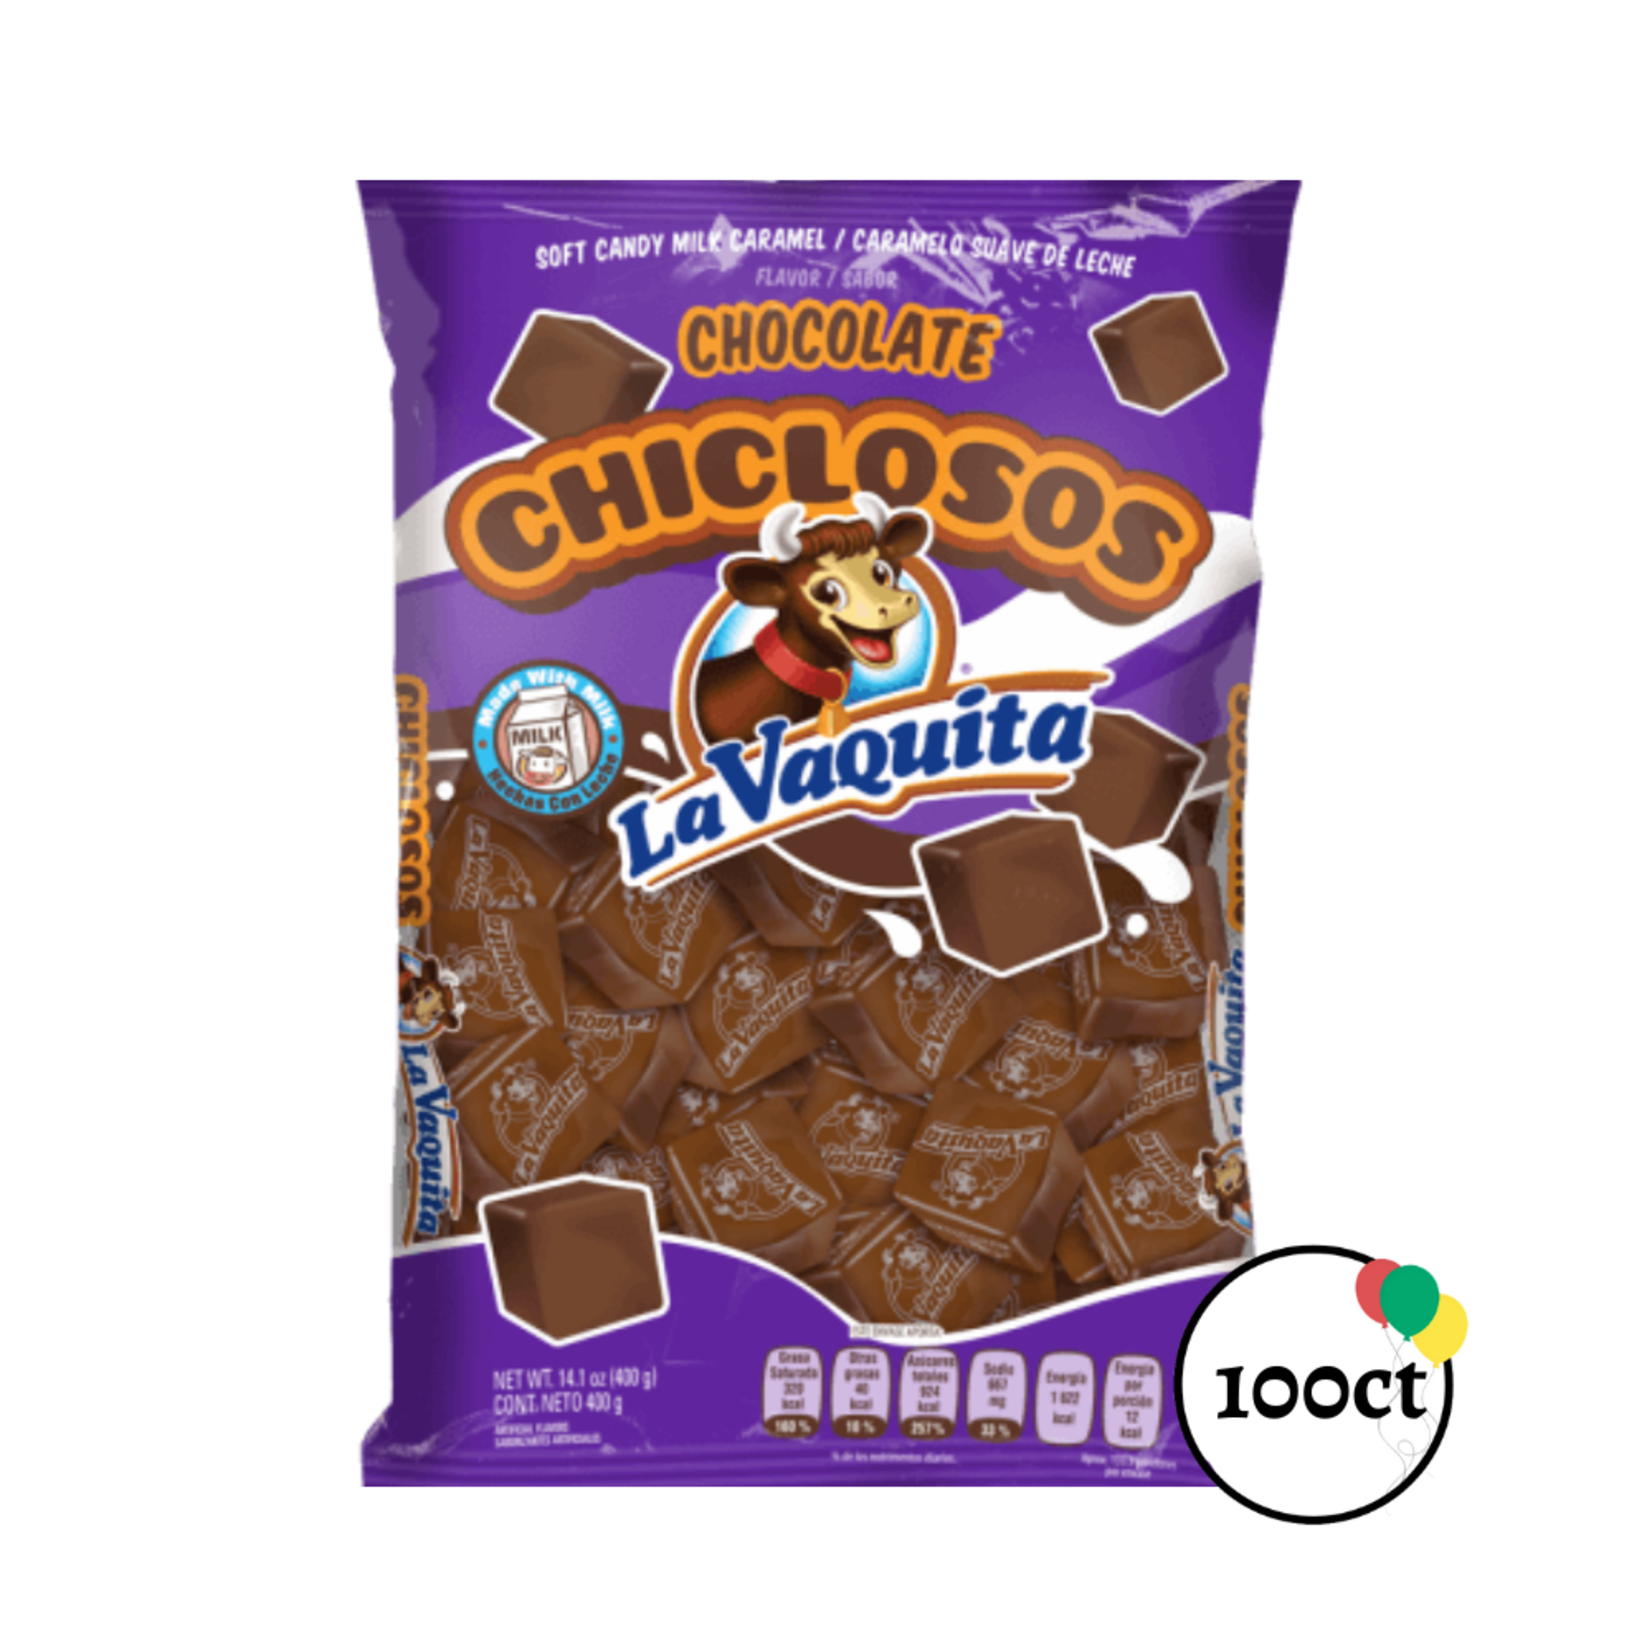 Canel's La Vaquita Chiclosos Chocolate